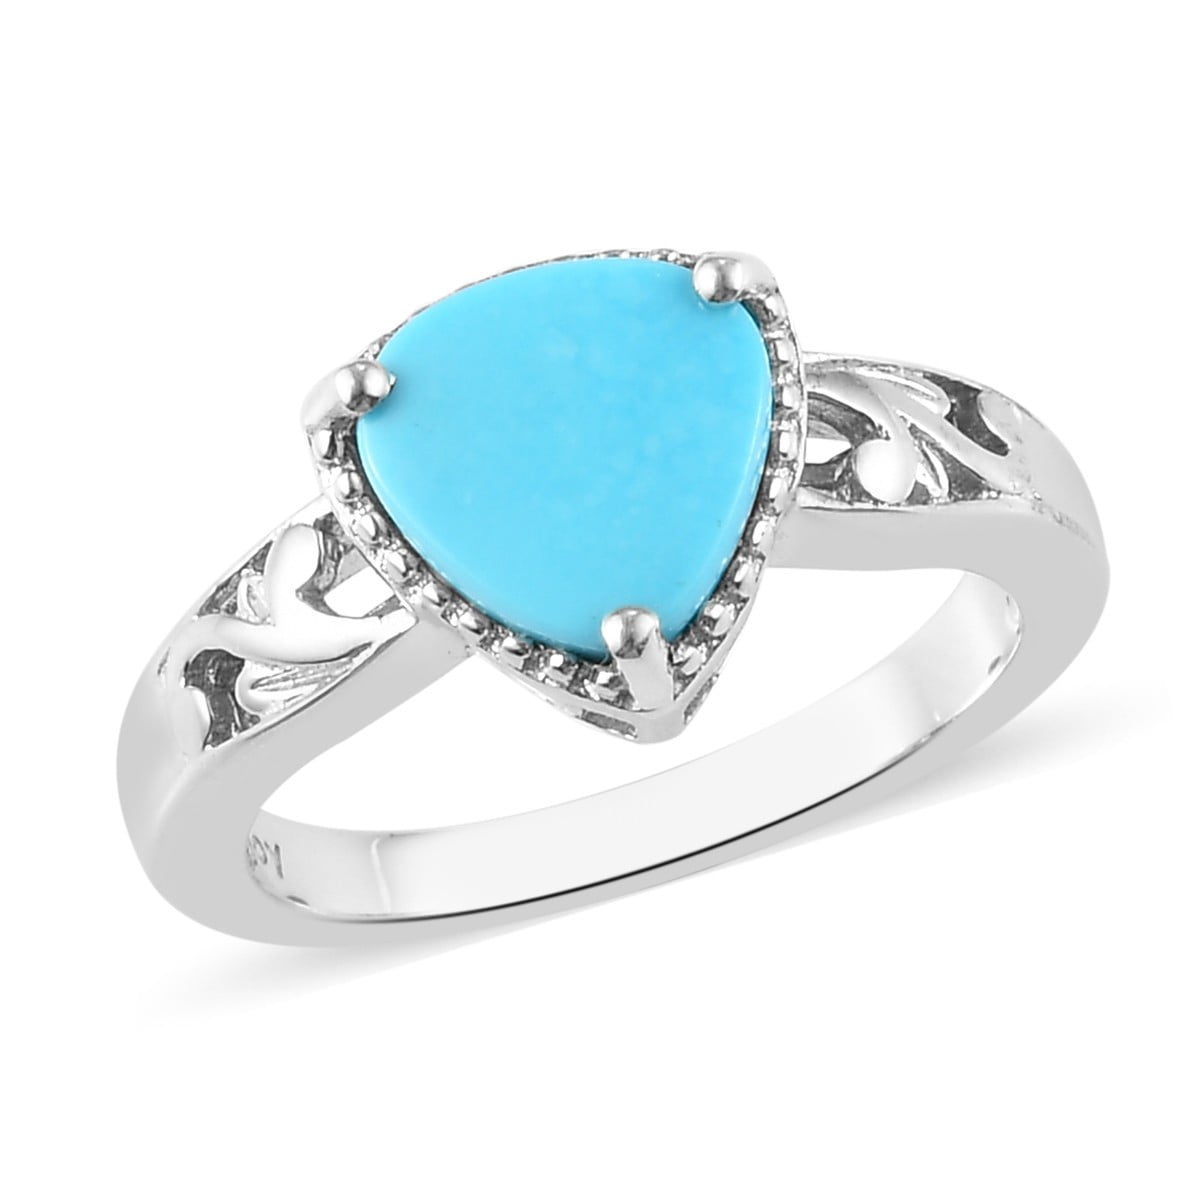 Beautiful shiny new crystal turquoise ring